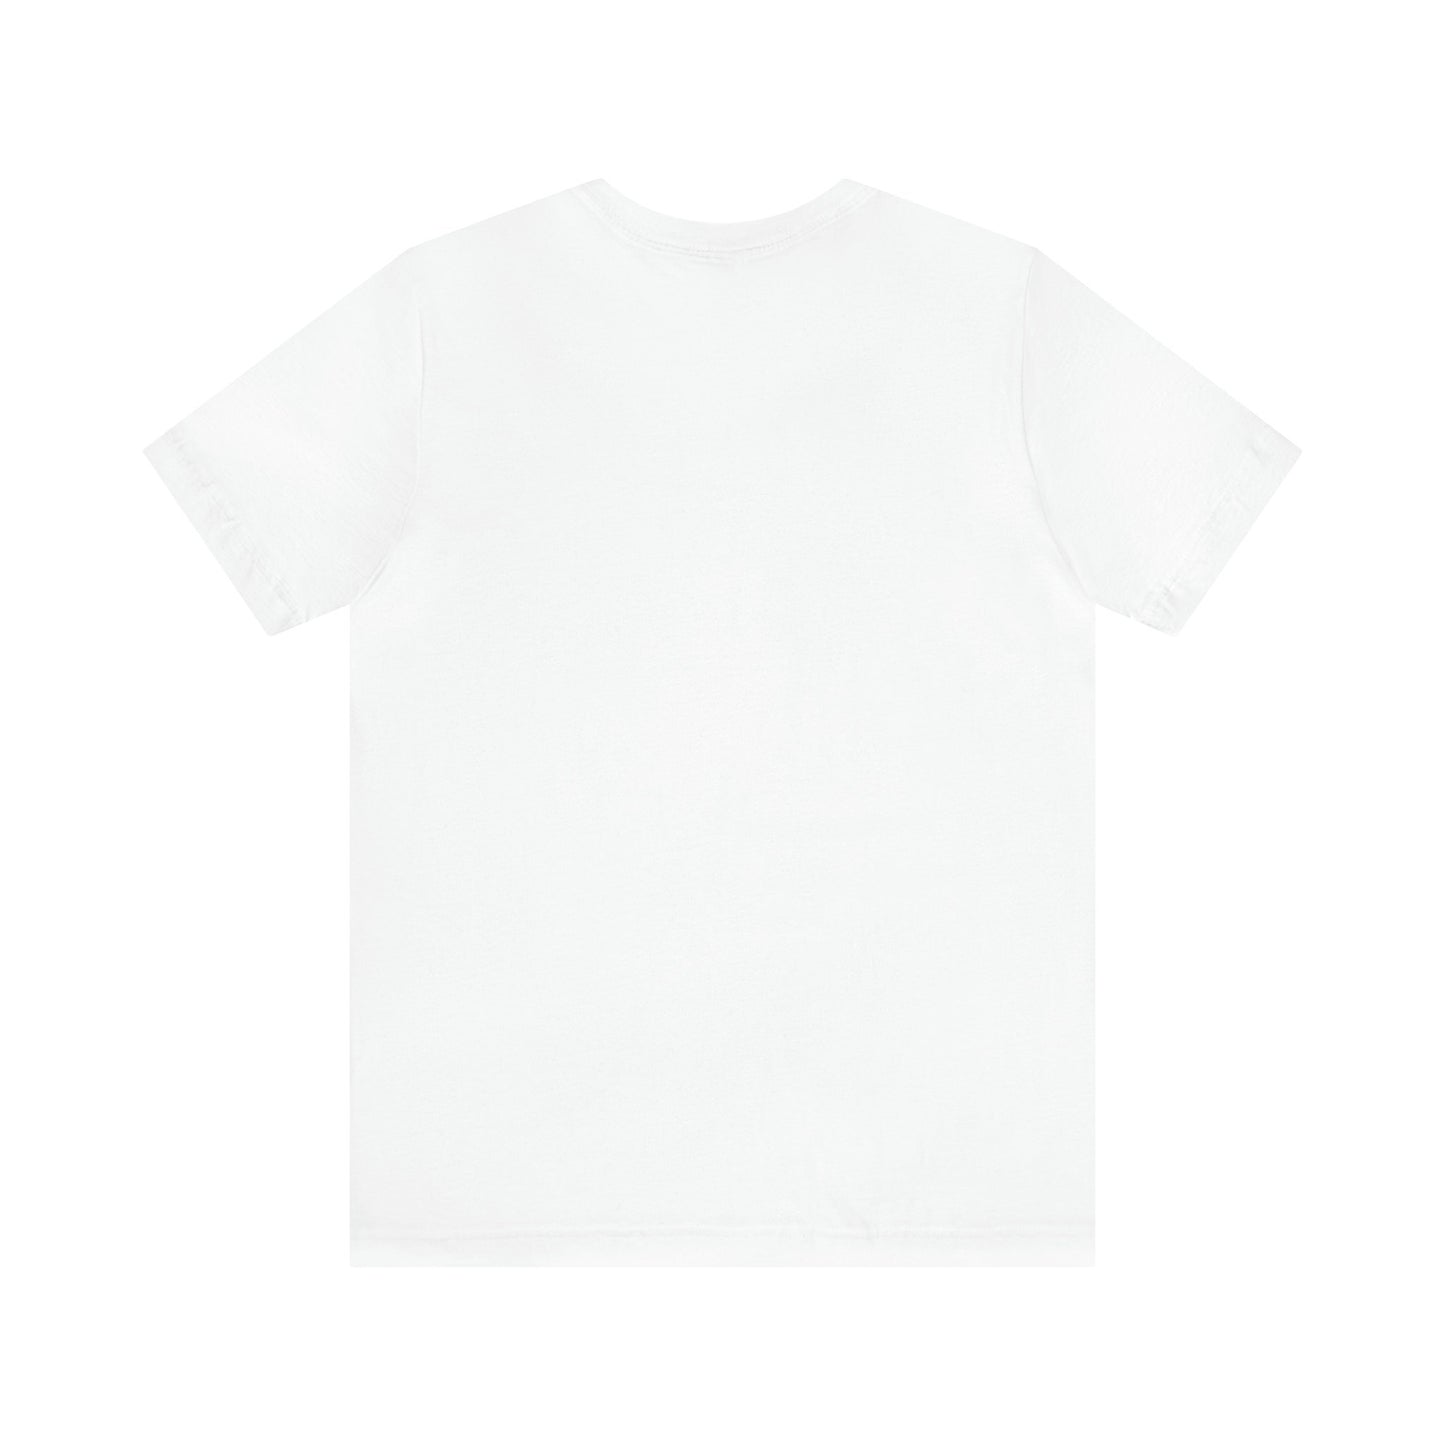 T Shirt for Festivals, Raves, Events | Reaching Aurora. | Unisex, Streetwear, Trippy T-Shirt, T-Shirt, Rave Wear